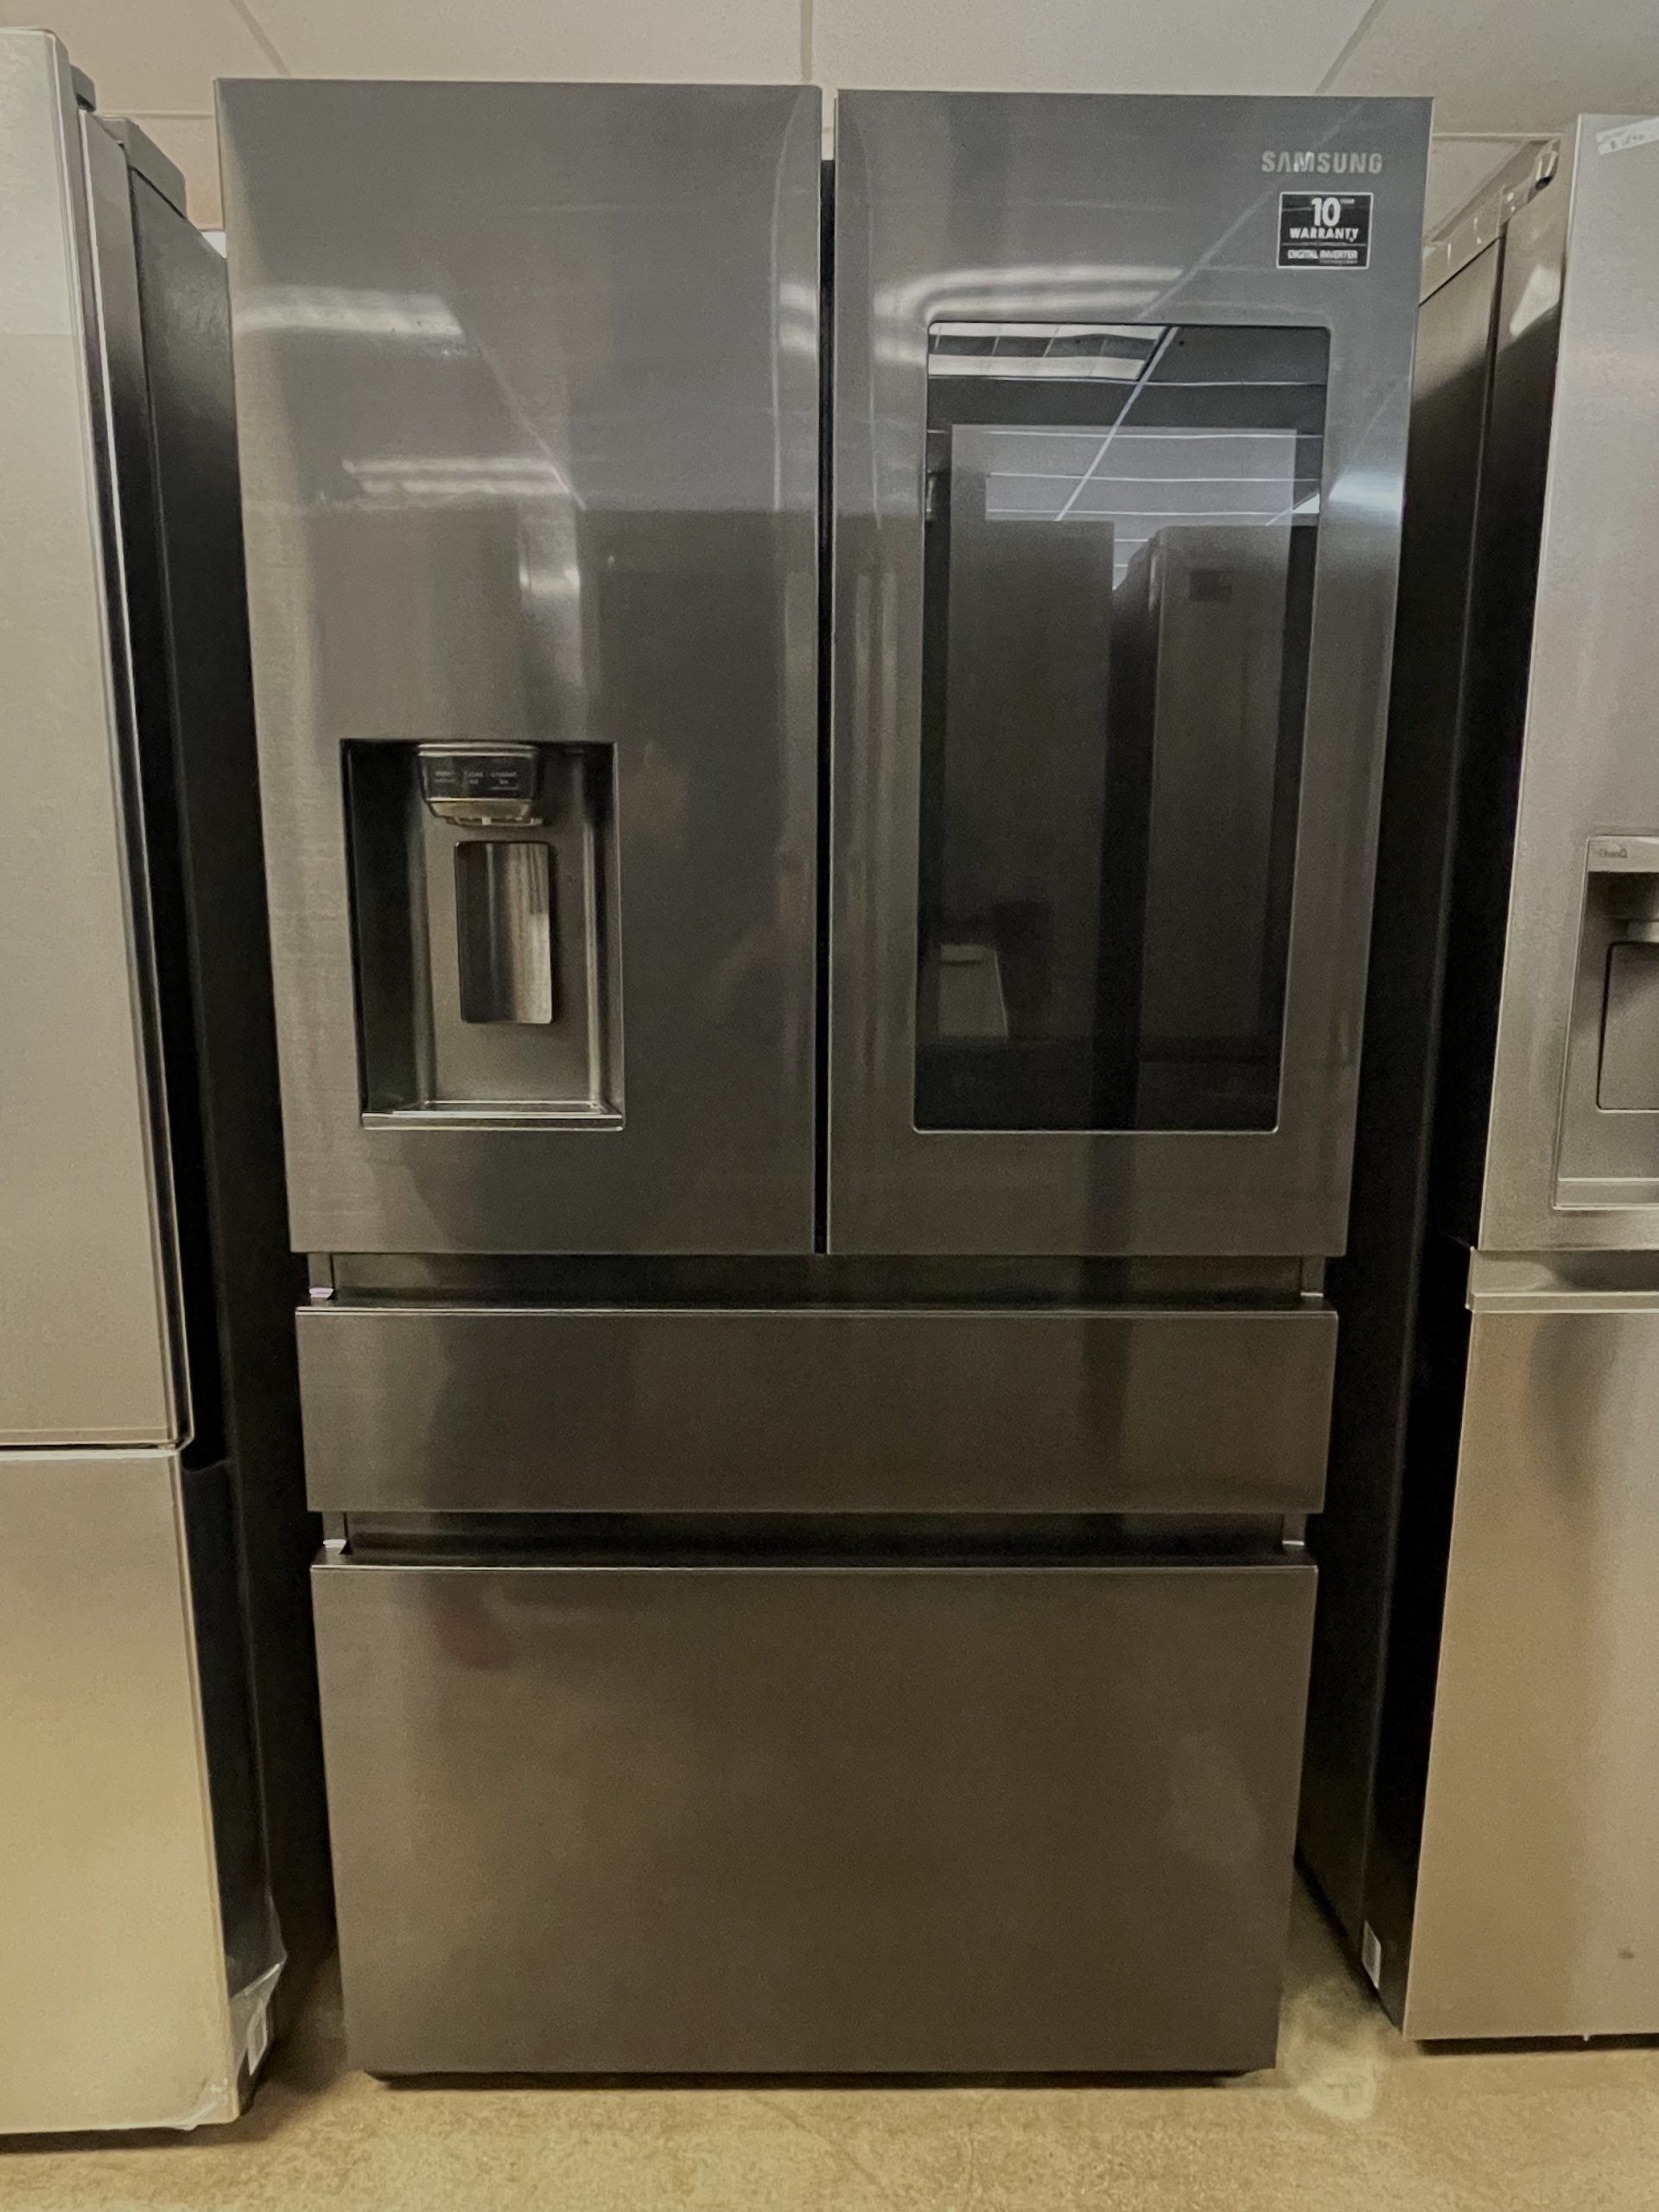 Samsung Refrigerators - Full Depth French Door Family Hub 30 Cu Ft